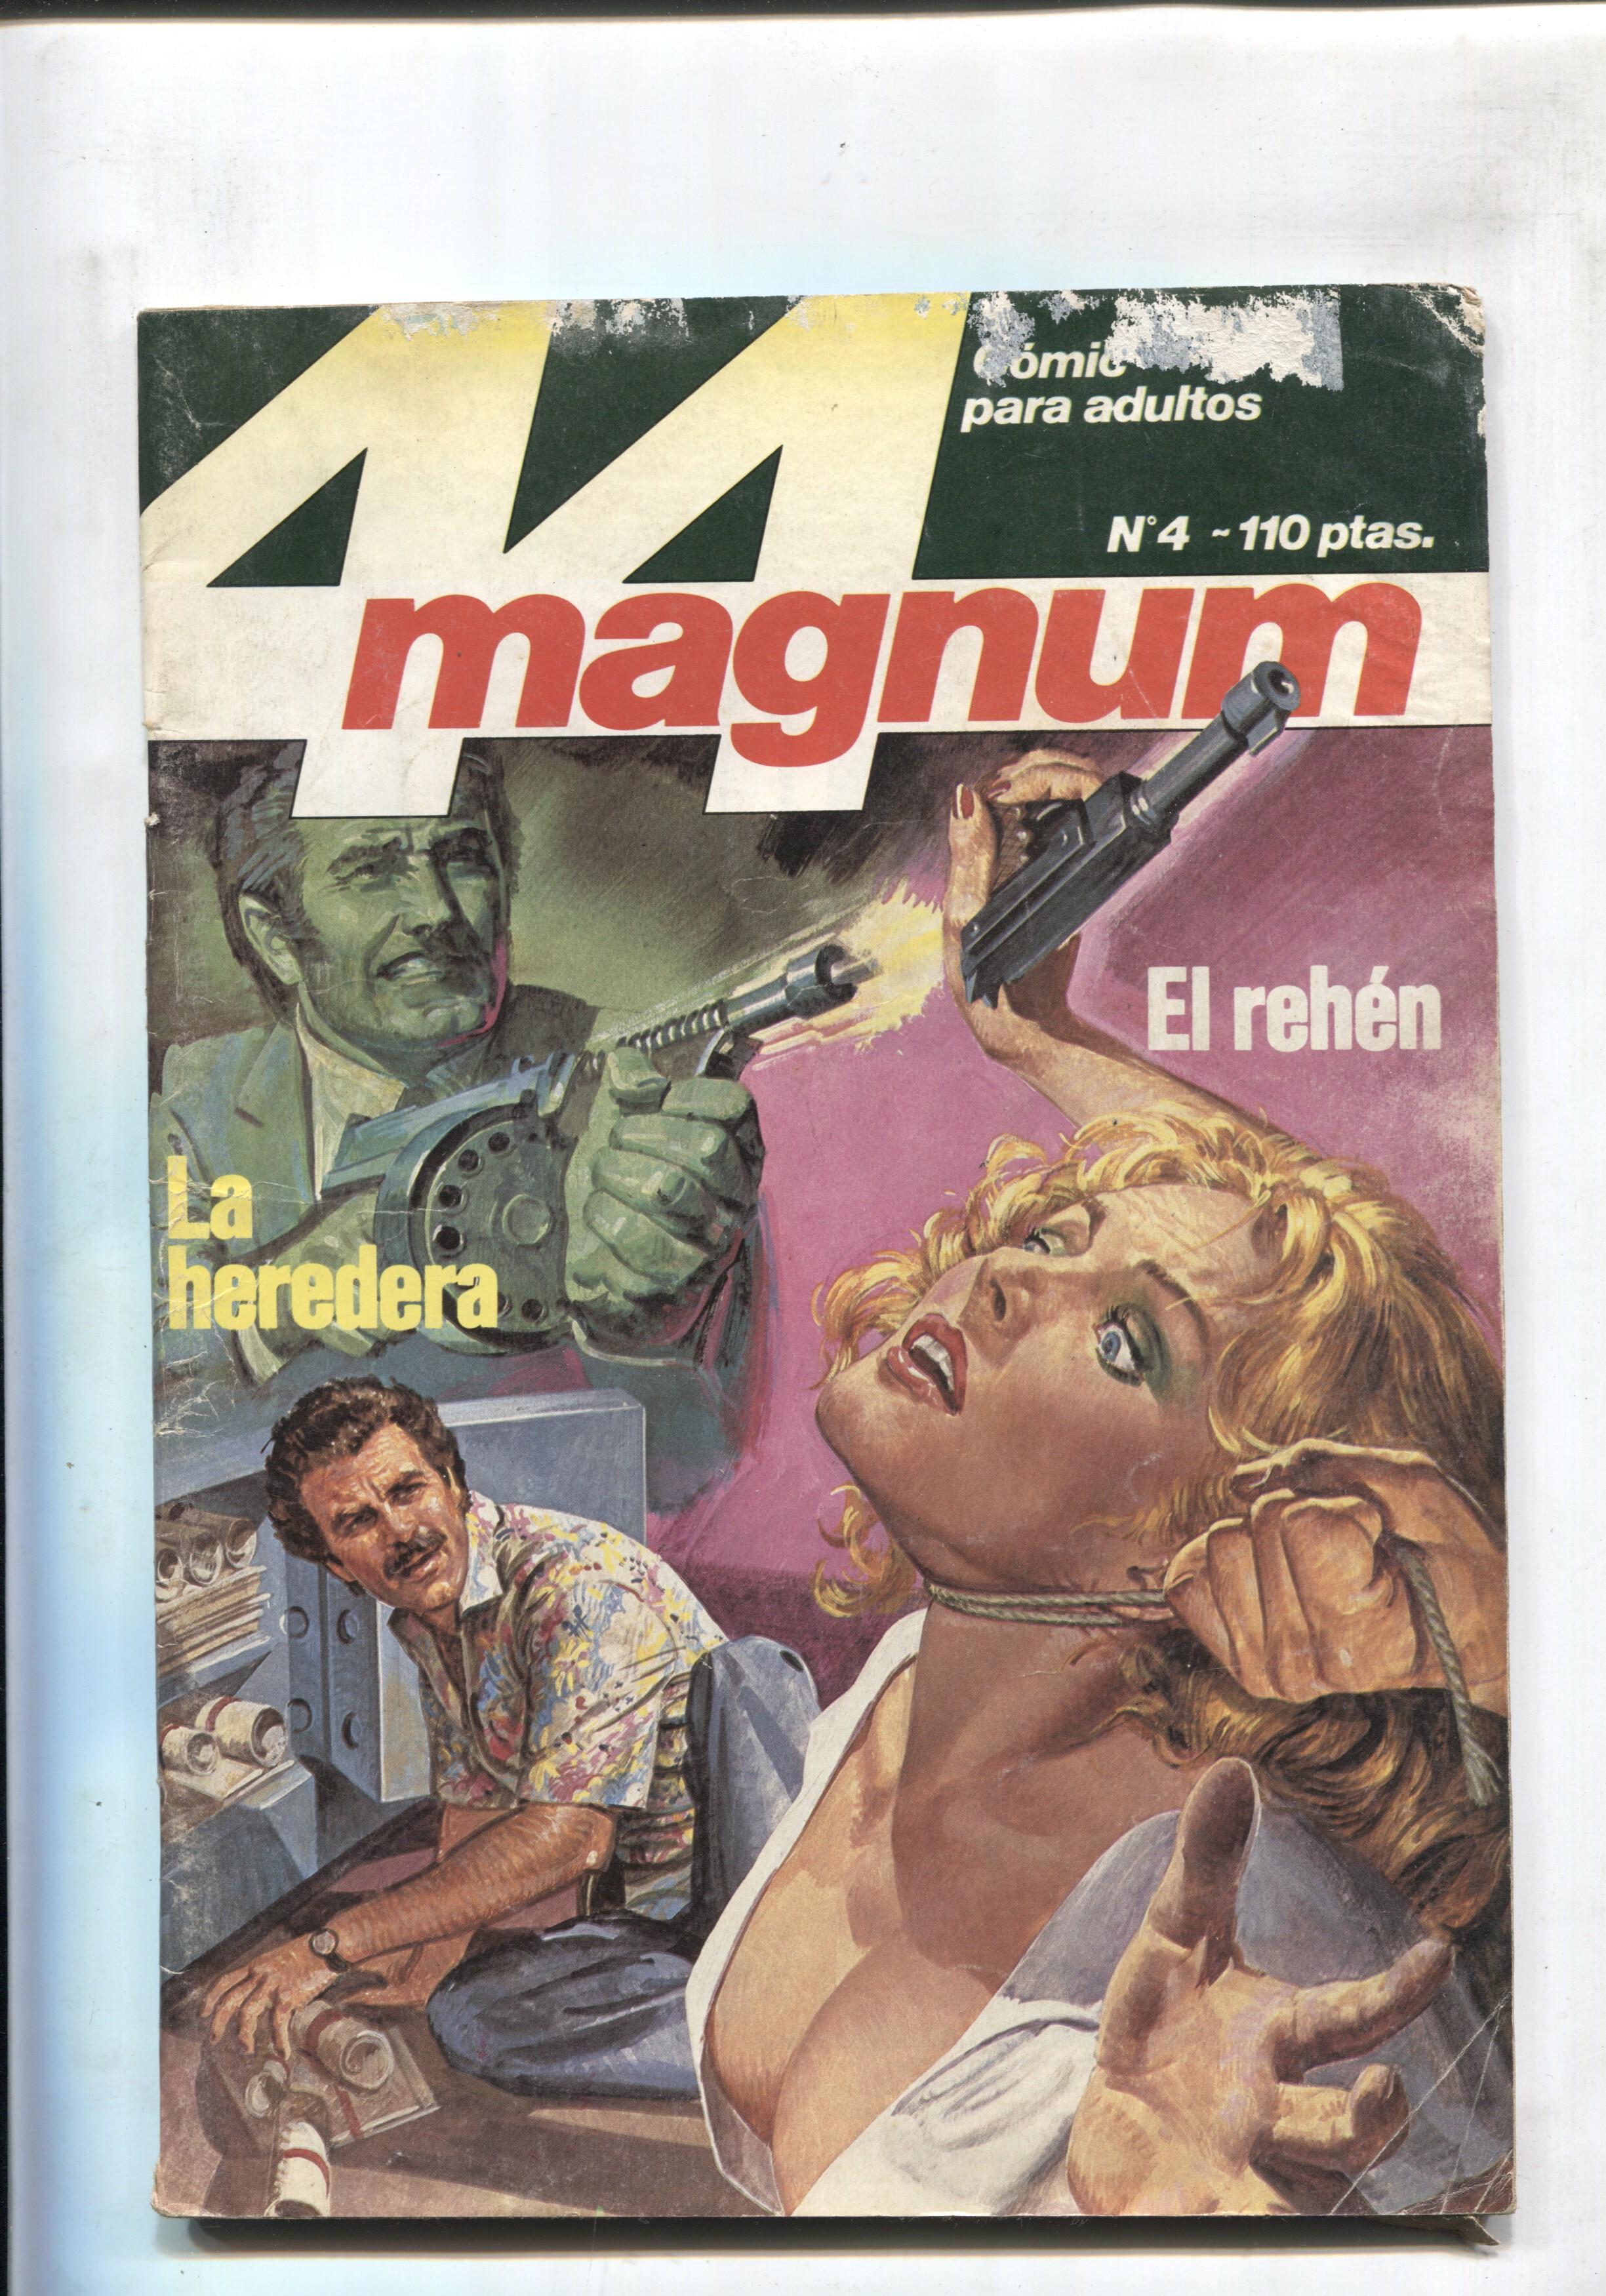 Magnum 44 numero 04 (numerada 1 en trasera)